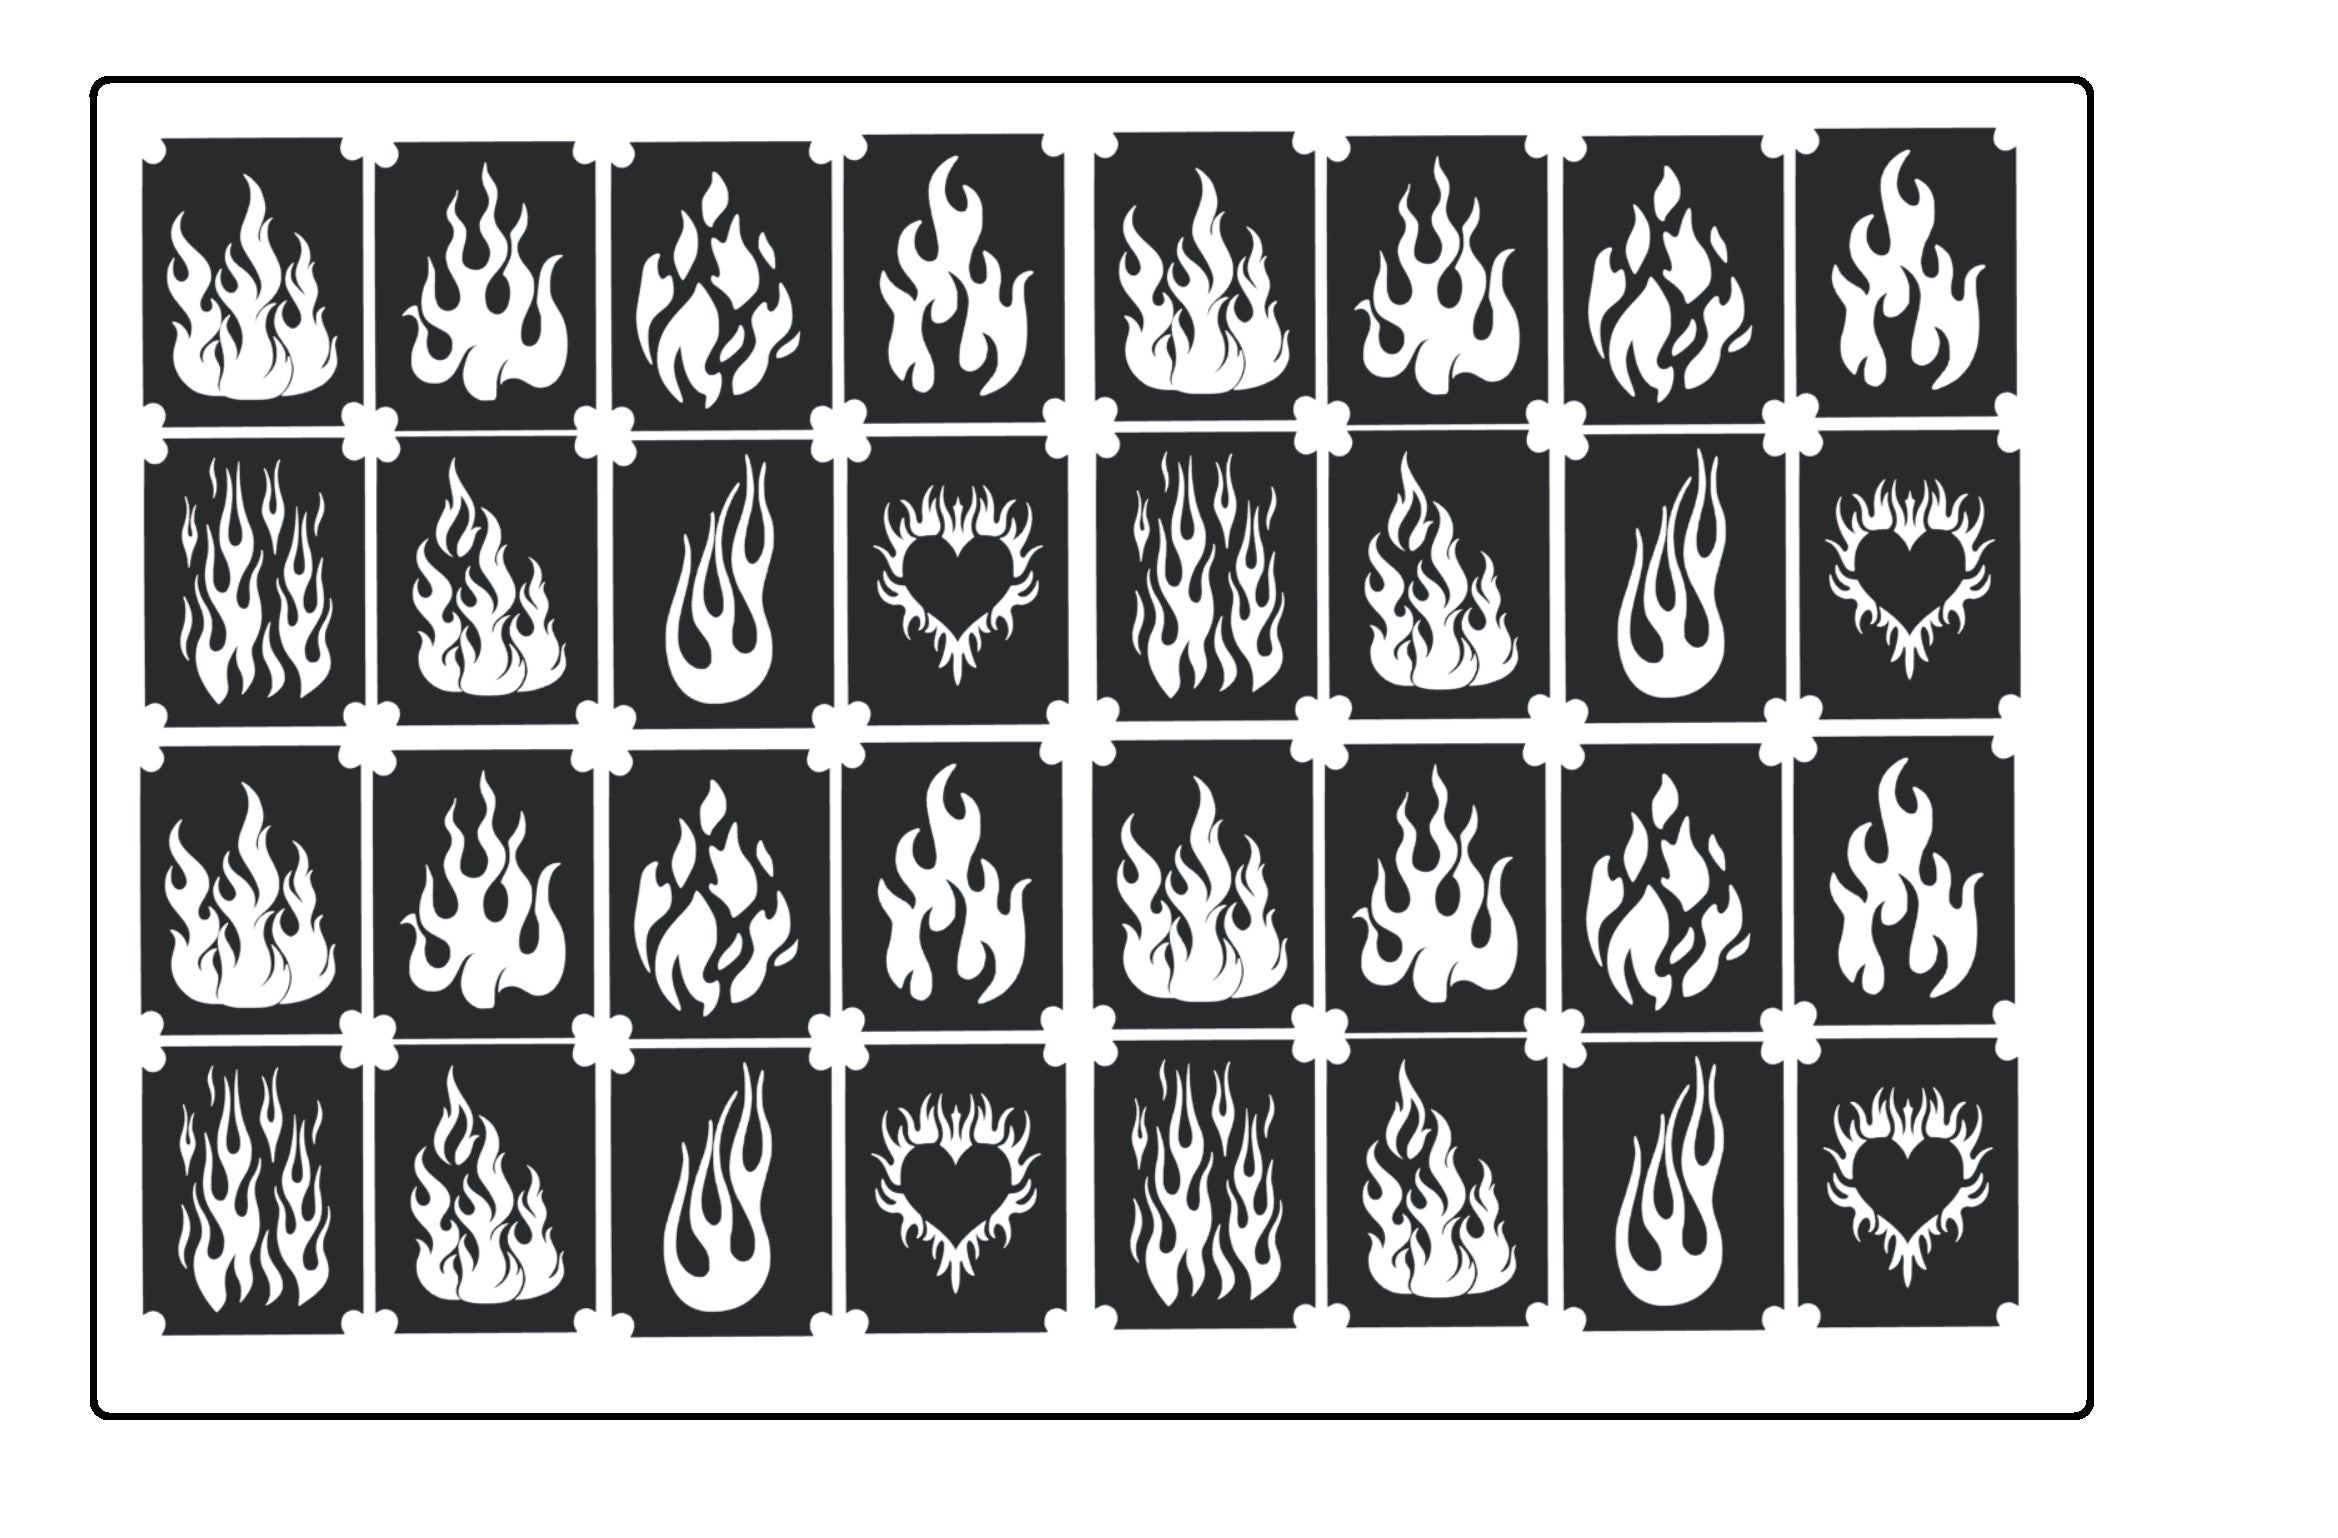 tribalflamemaskgif 710554  Flame tattoos Tattoo pattern Flame  design